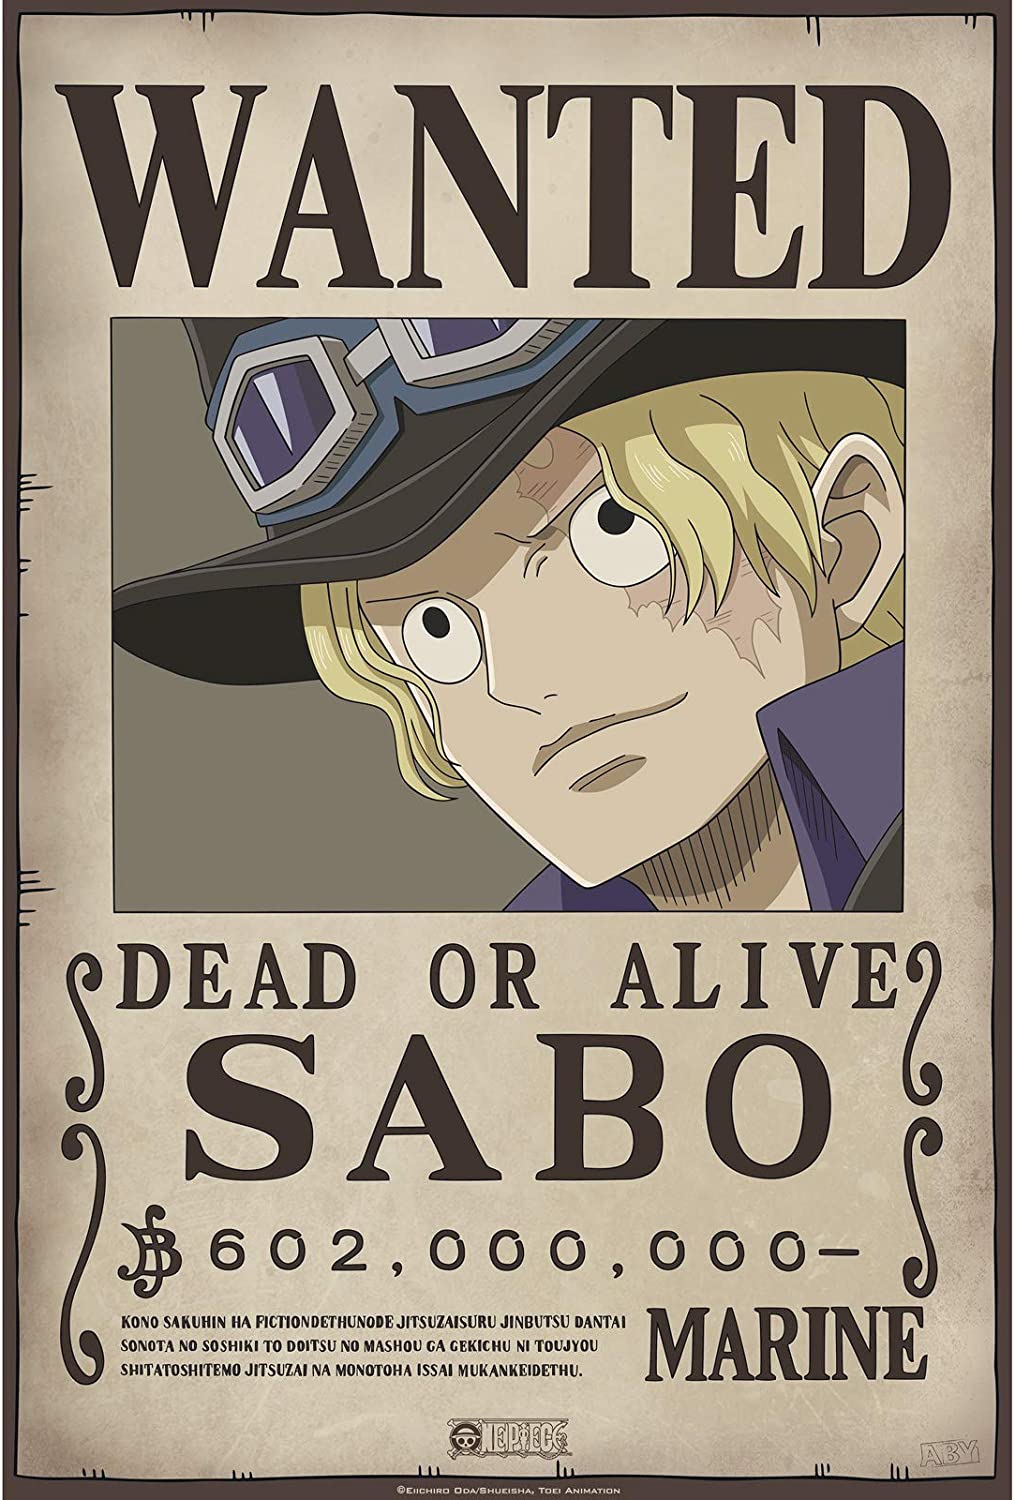 Mini Poster One Piece - SABO